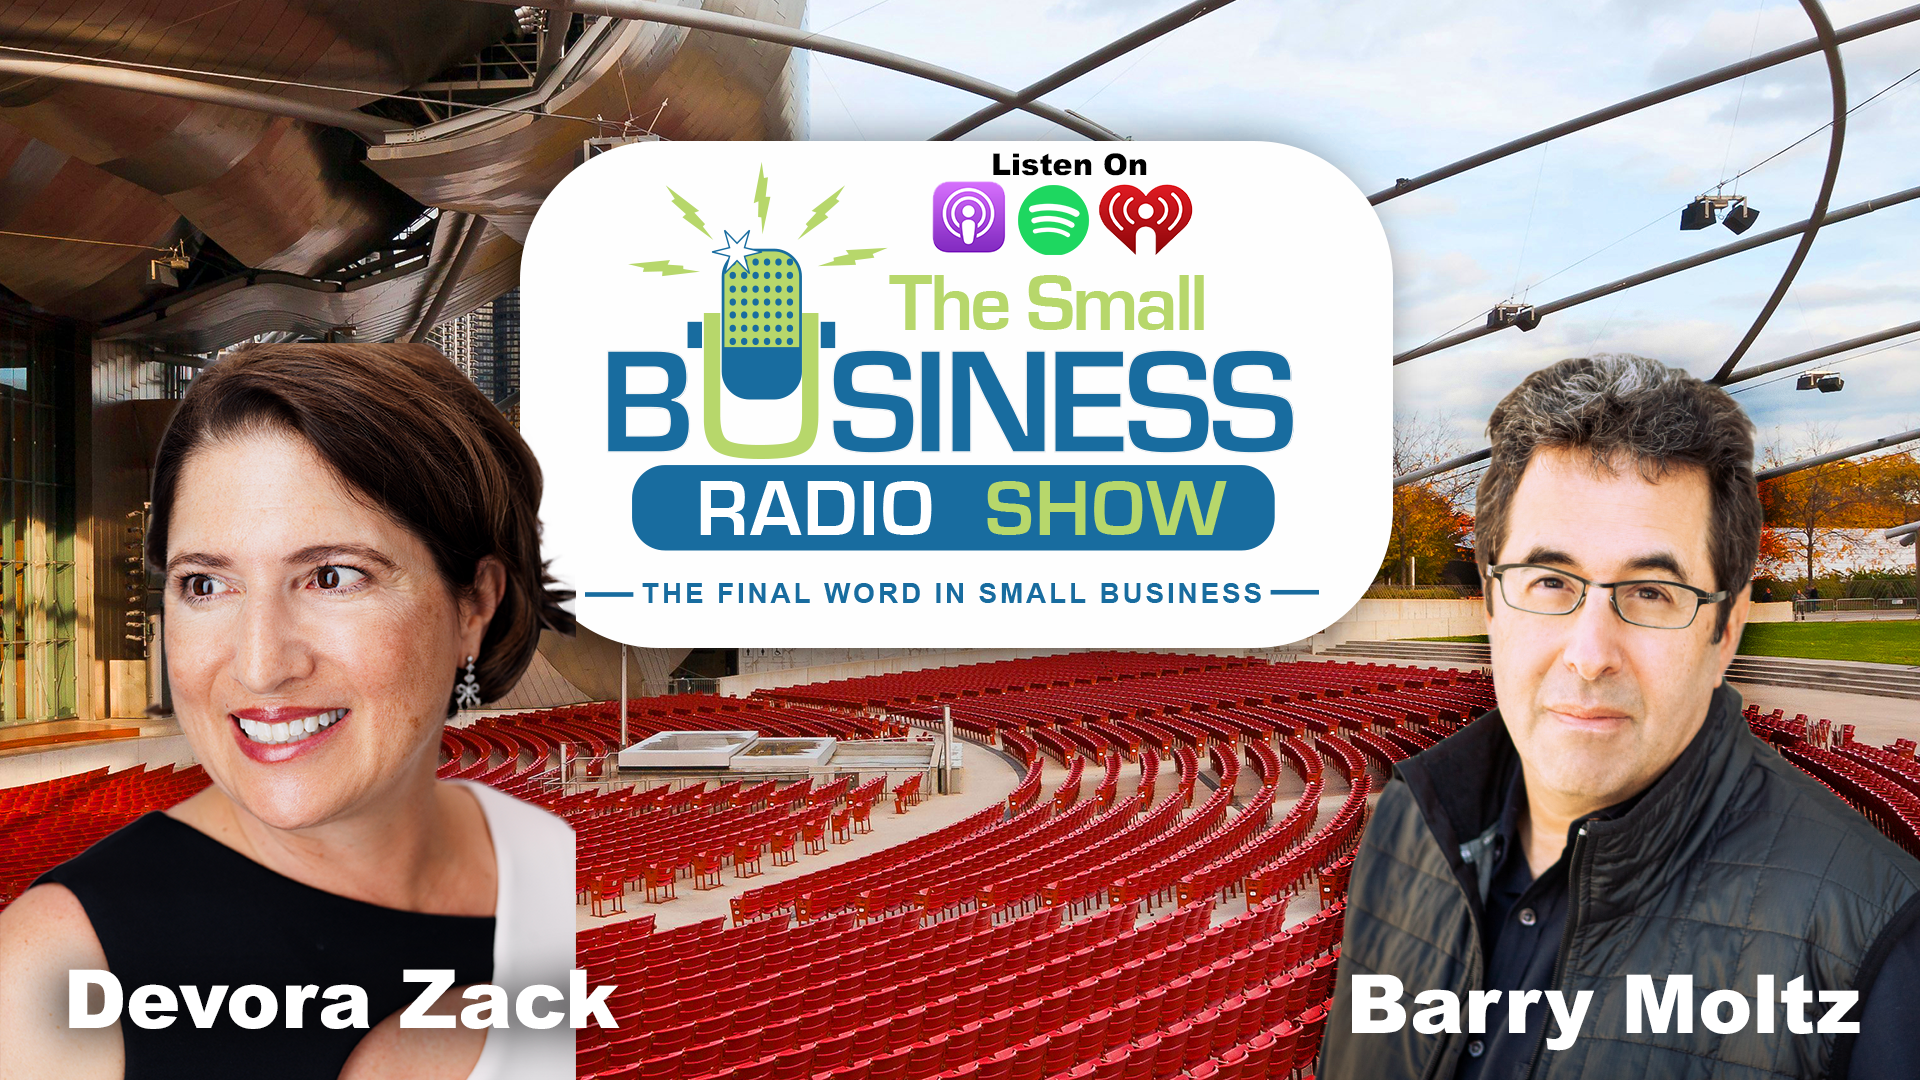 Devora Zack on The Small Business Radio Show